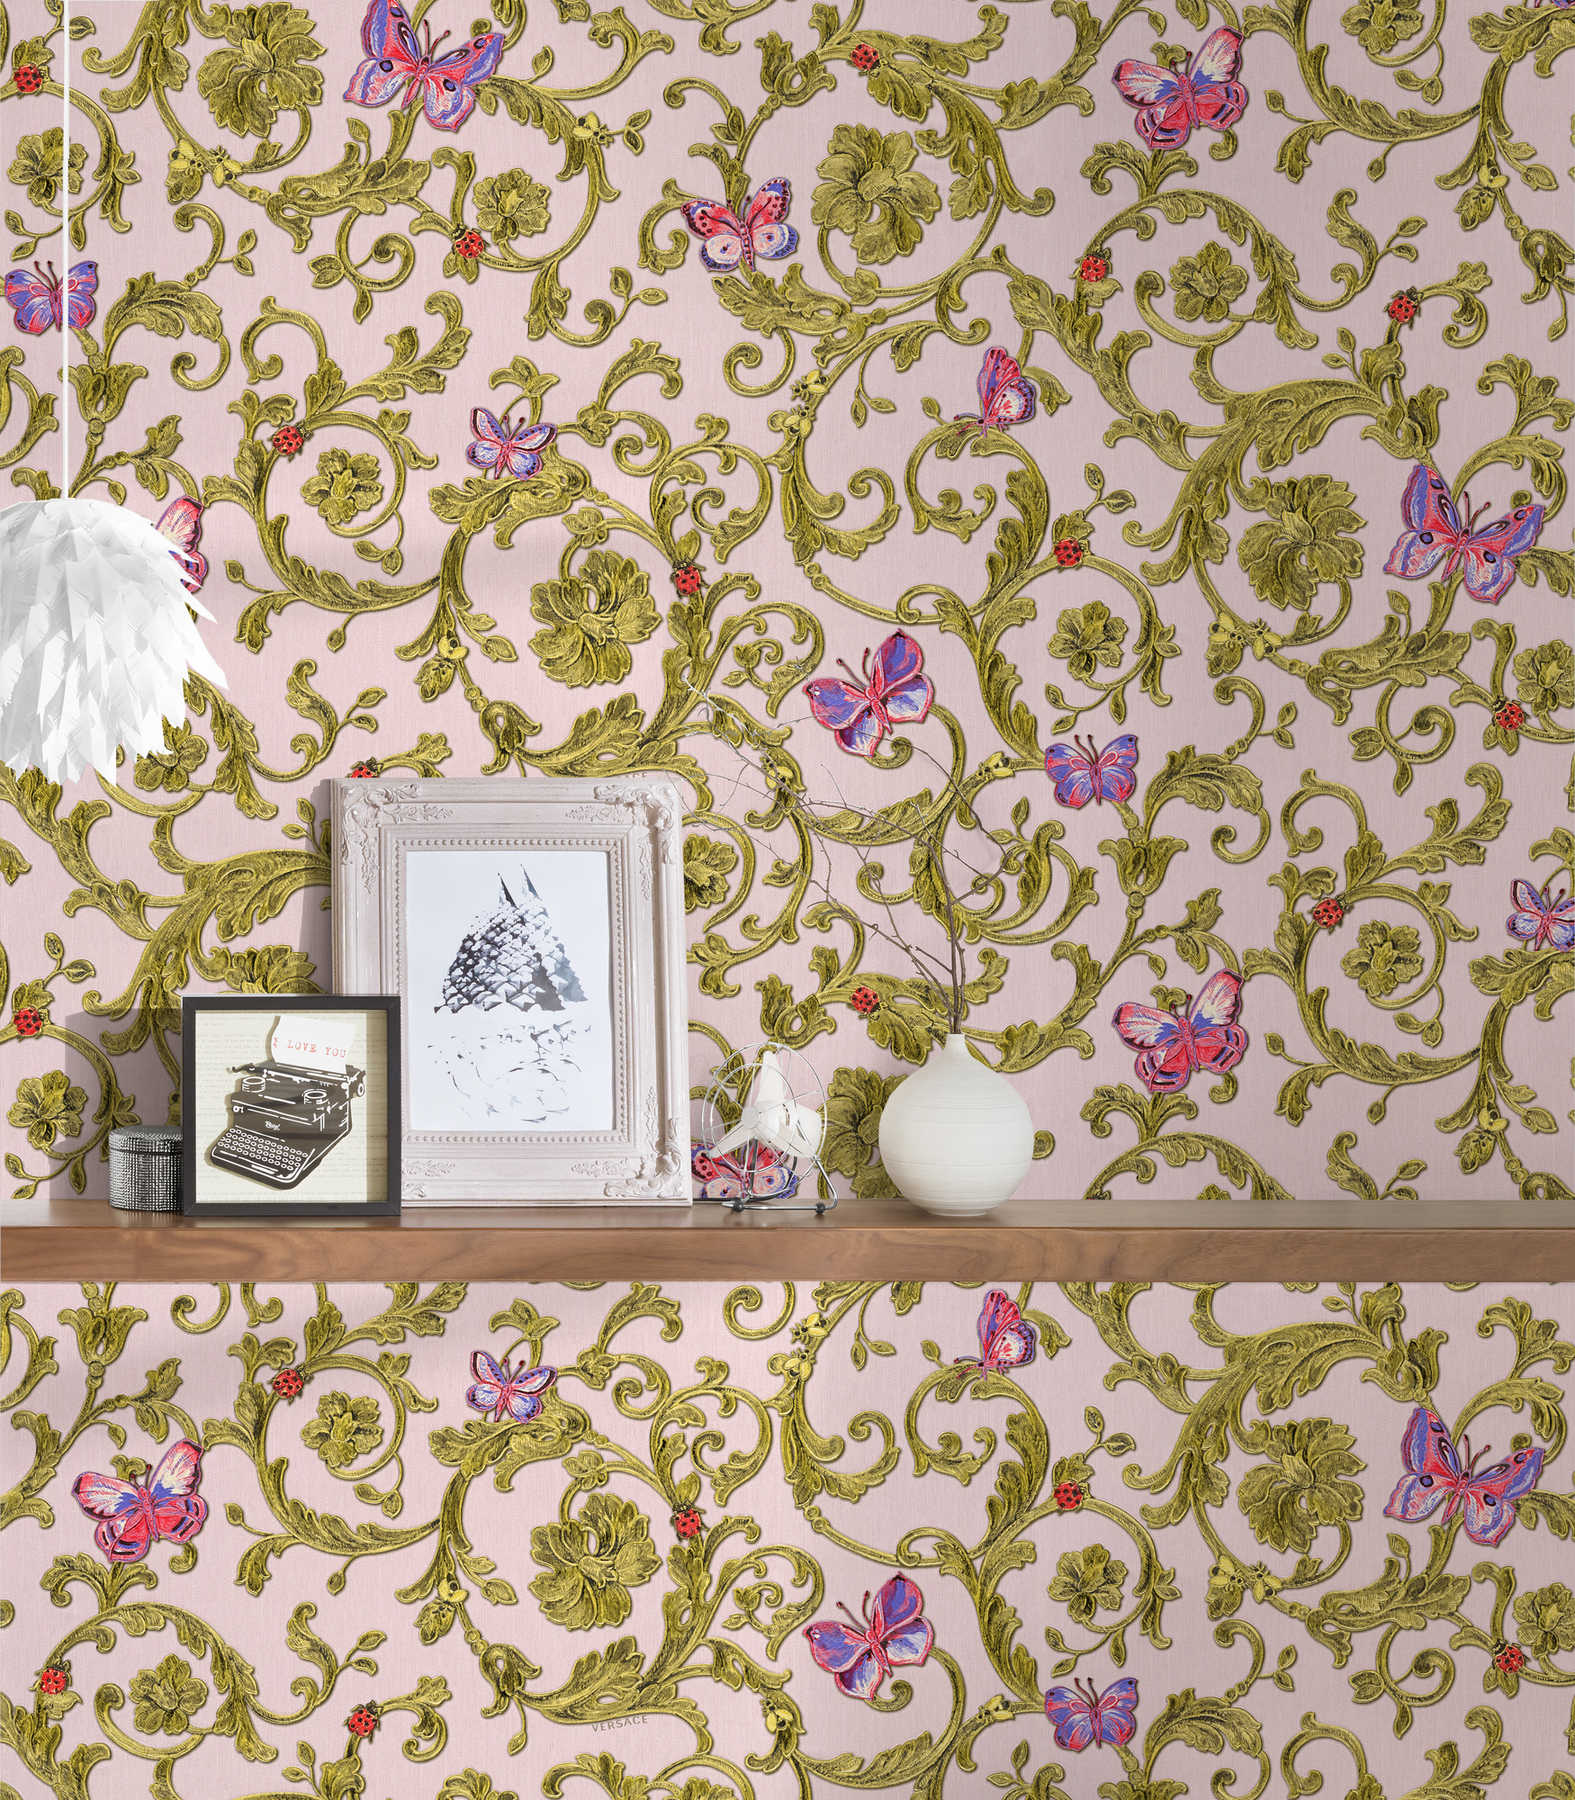             VERSACE wallpaper ornaments, flowers & butterflies - metallic, pink
        